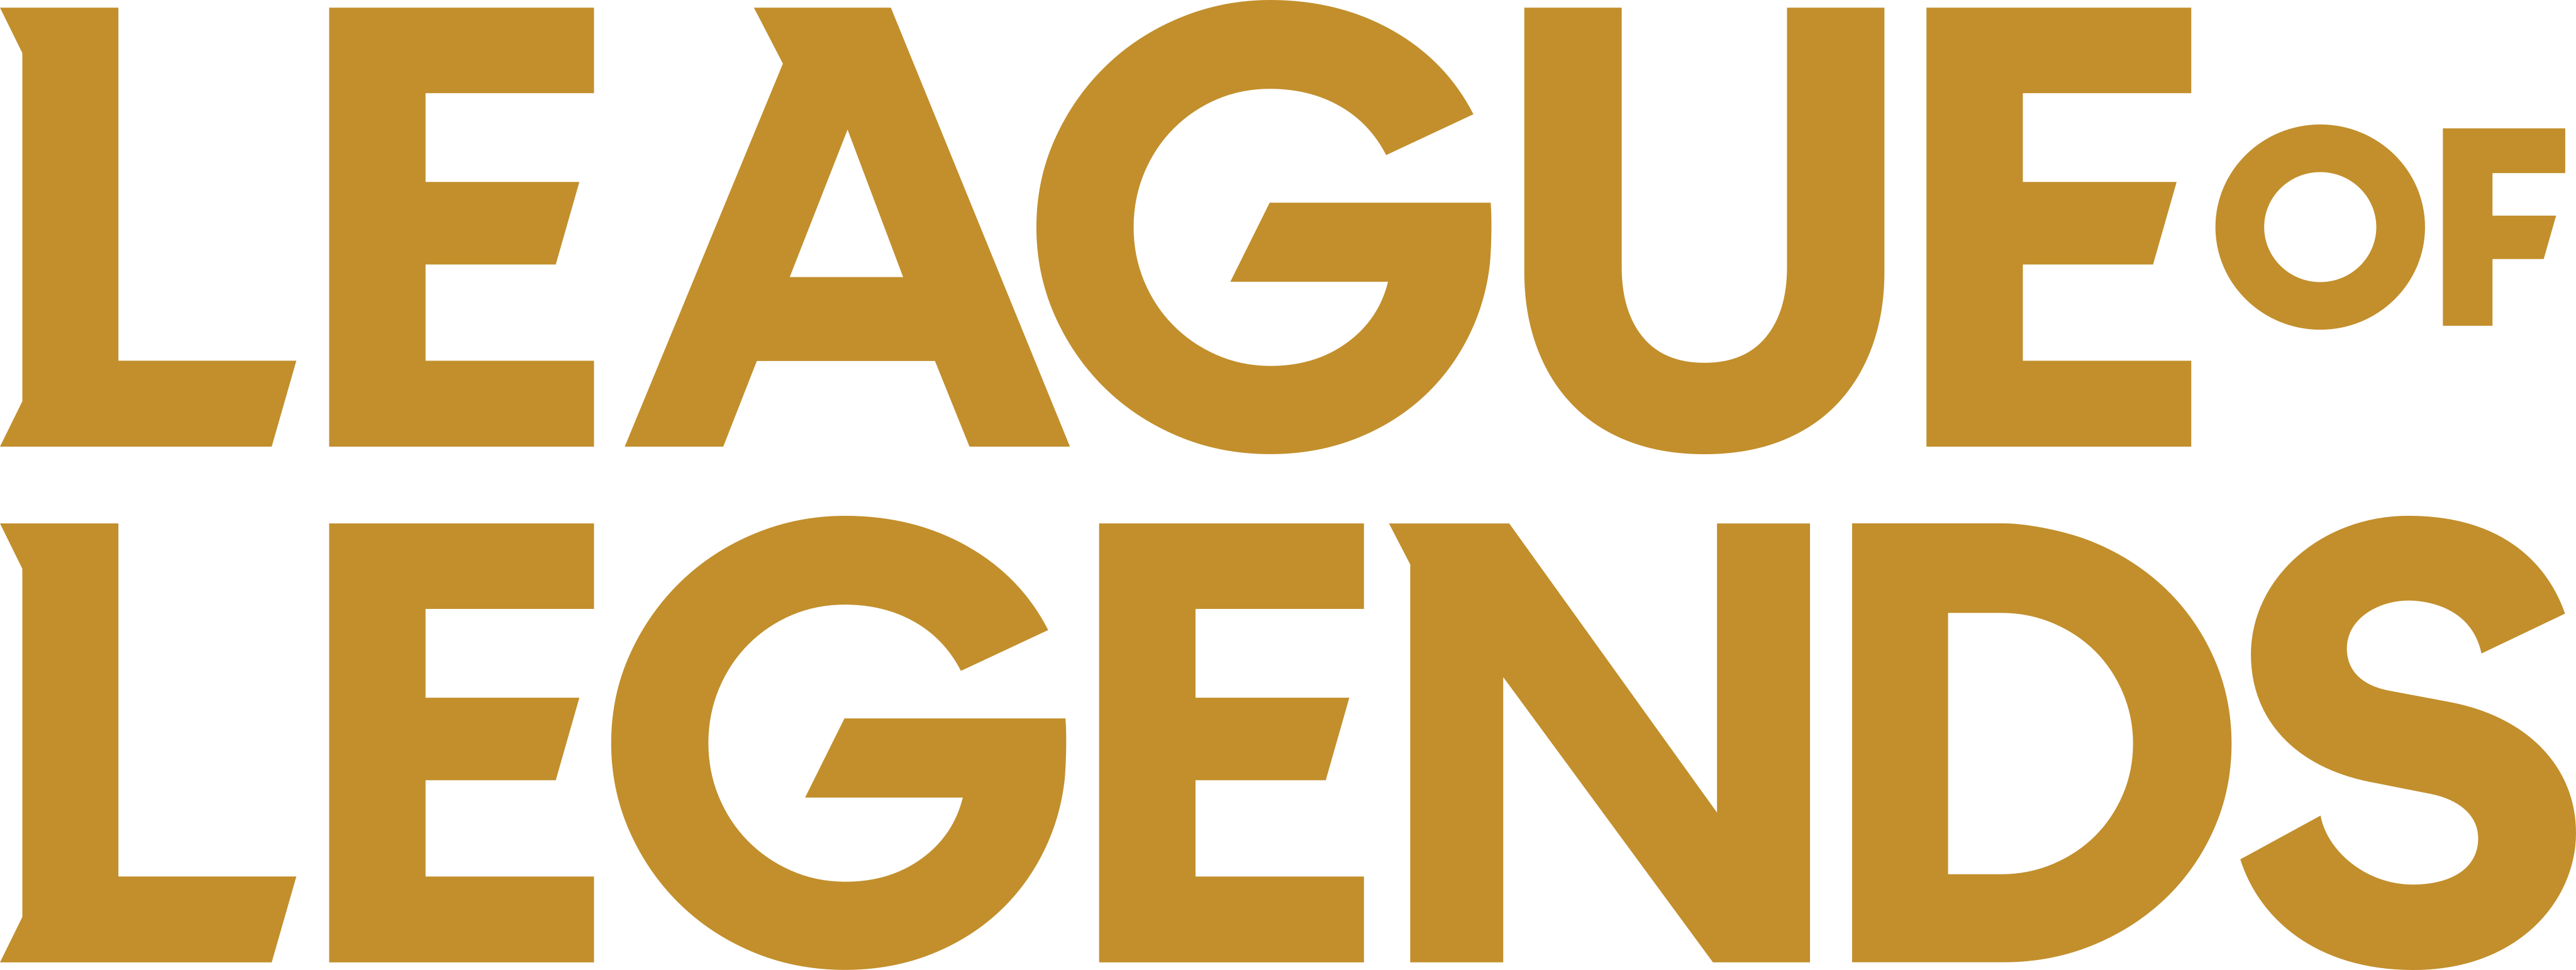 lol league of Legends logo 2 1 - Lol Logo - League Of Legends Logo